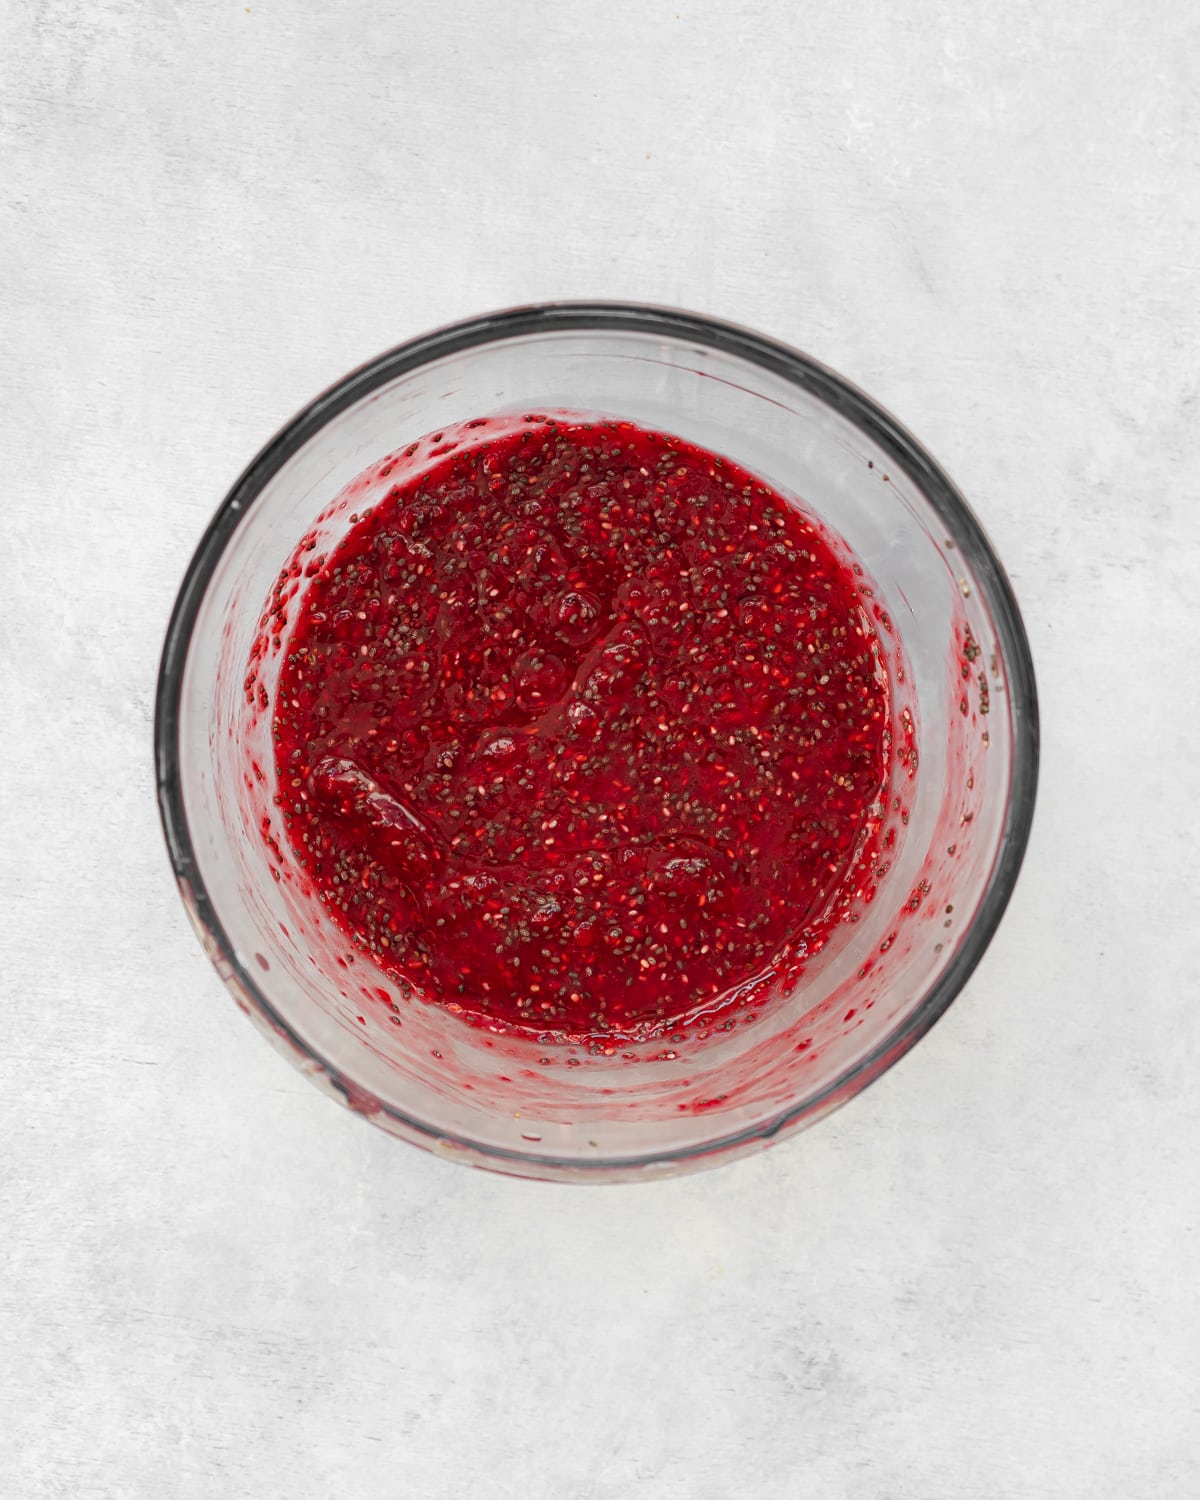 raspberry chia jam in a bowl.